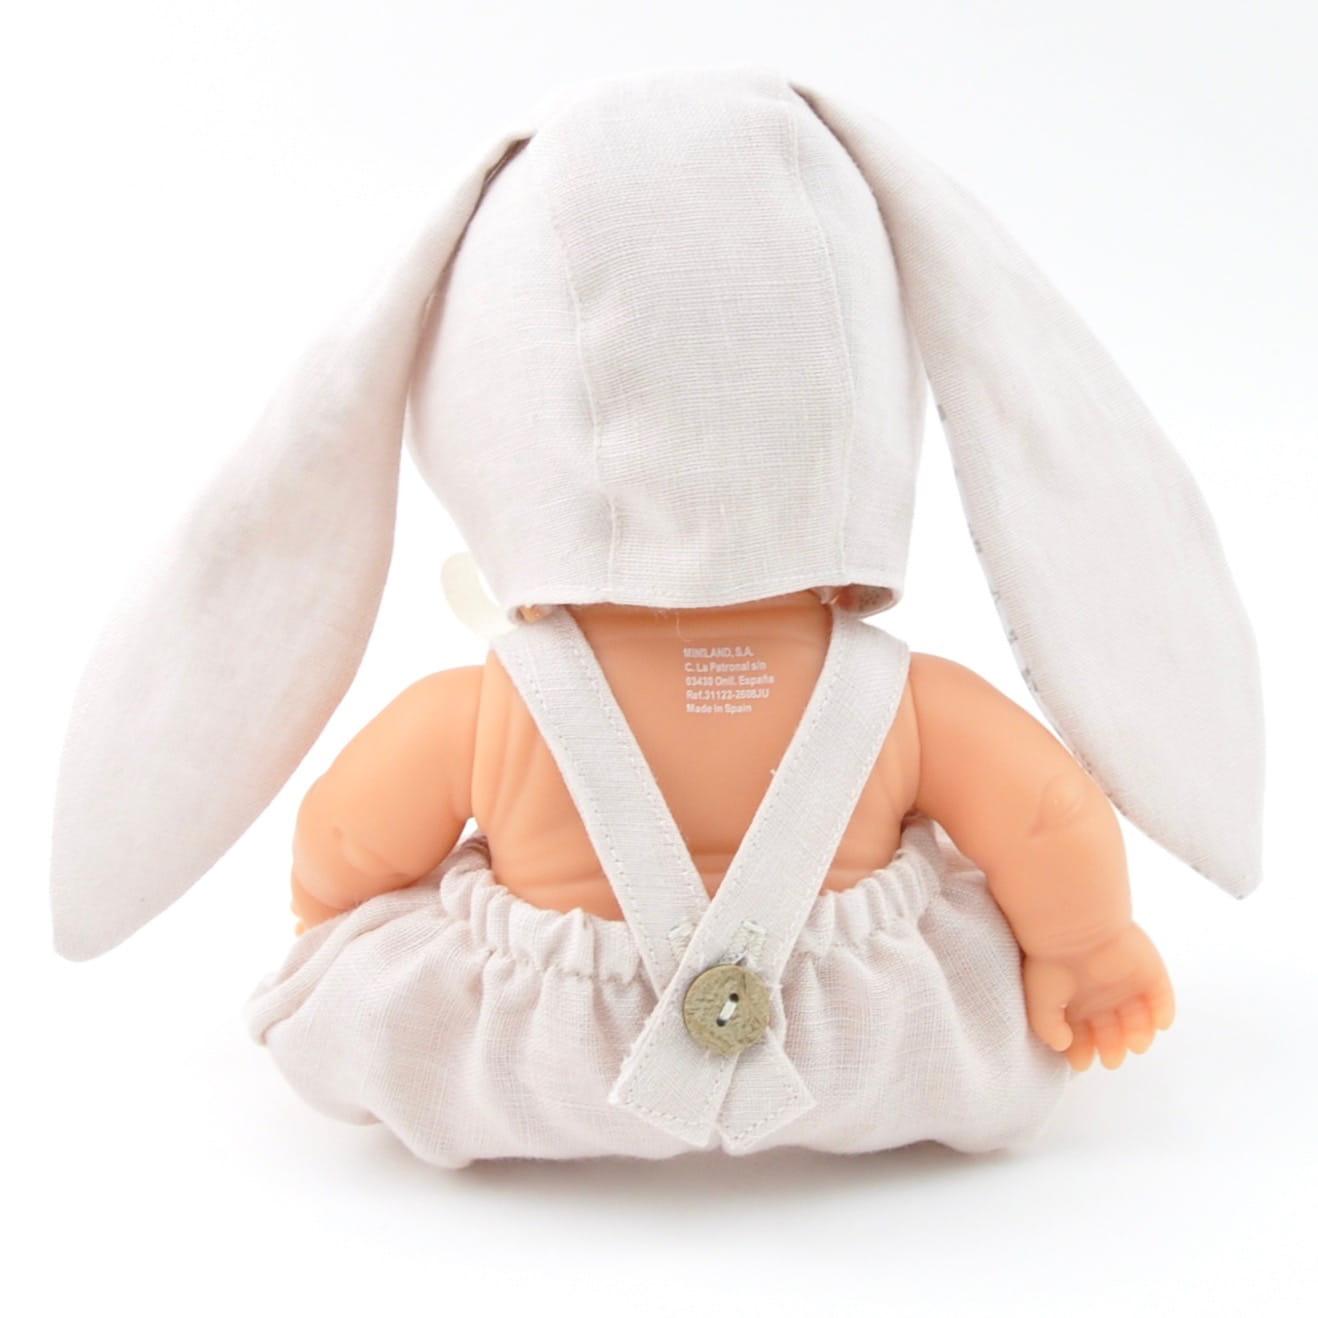 Przytullale: lniany kombinezon i bonnetka z króliczymi uszami dla mini lalki Miniland - Noski Noski